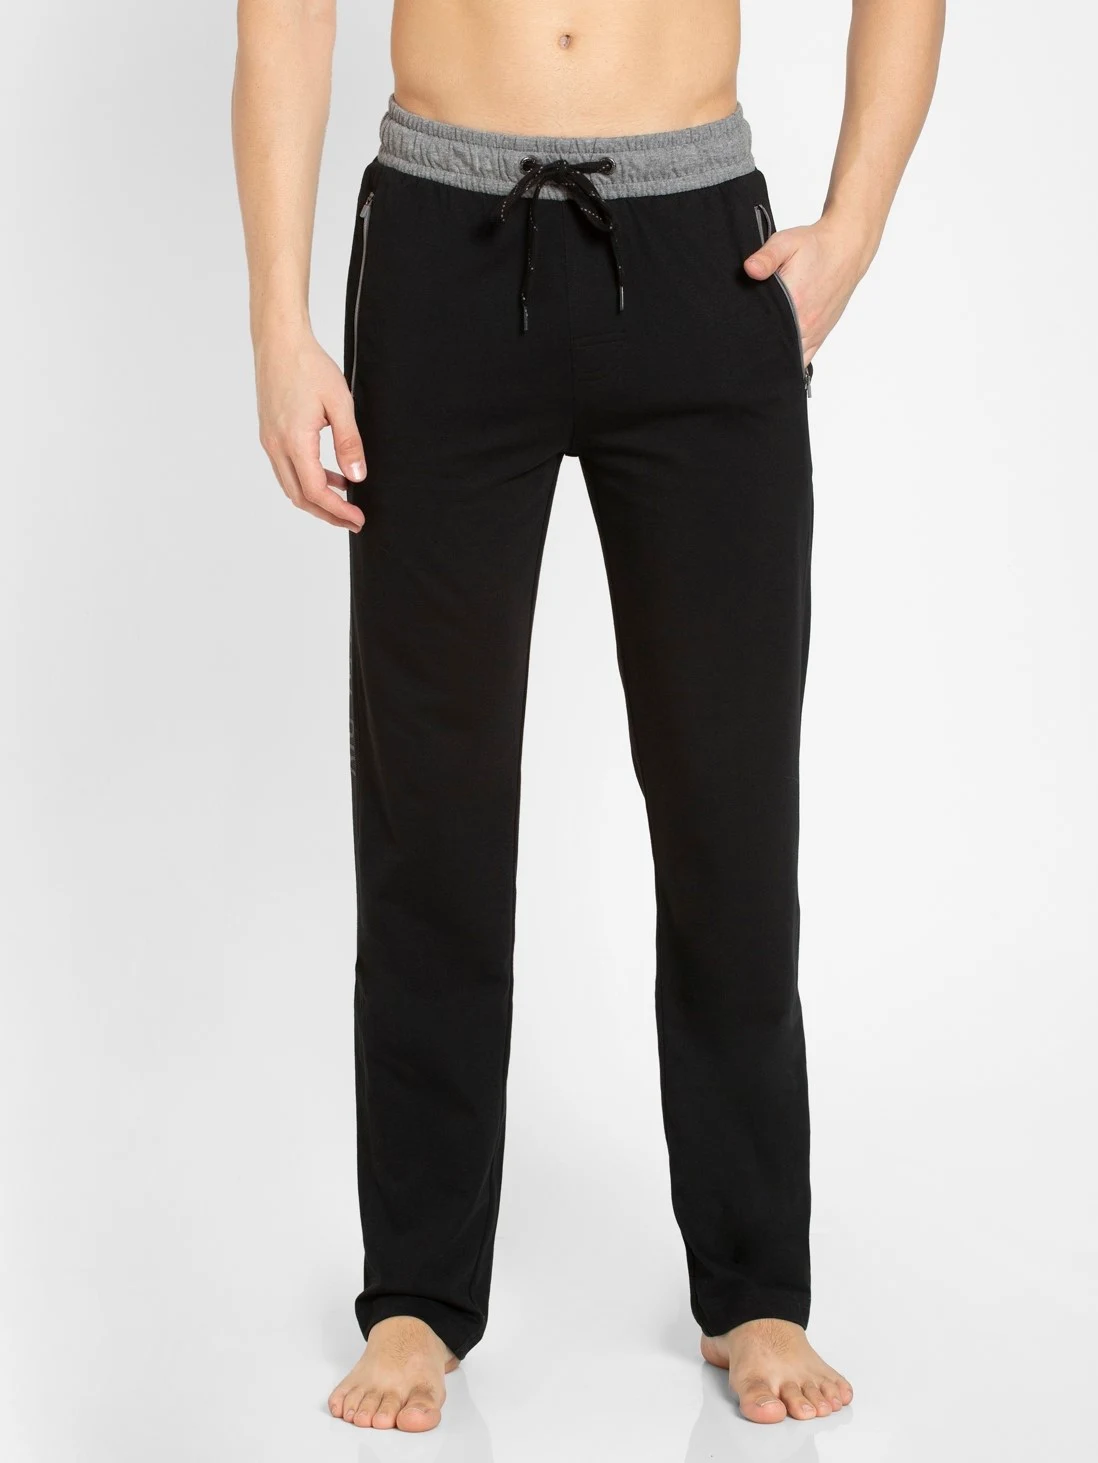 Jockey Black Lounge Pants for Women #1301 [New Fit] at Rs 879.00, Sports  Lower, Sports Tack Pant, Lower Pants, Running Pants, ट्रैक पैंट - Zedds,  New Delhi